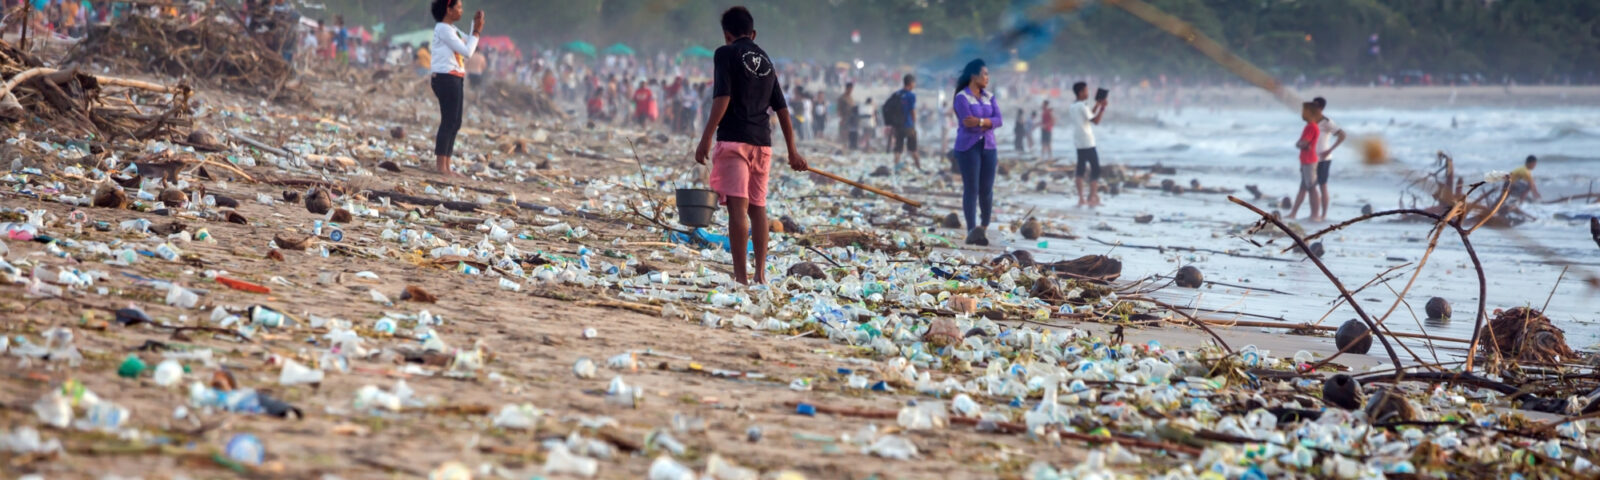 Plastforsøpling på strand